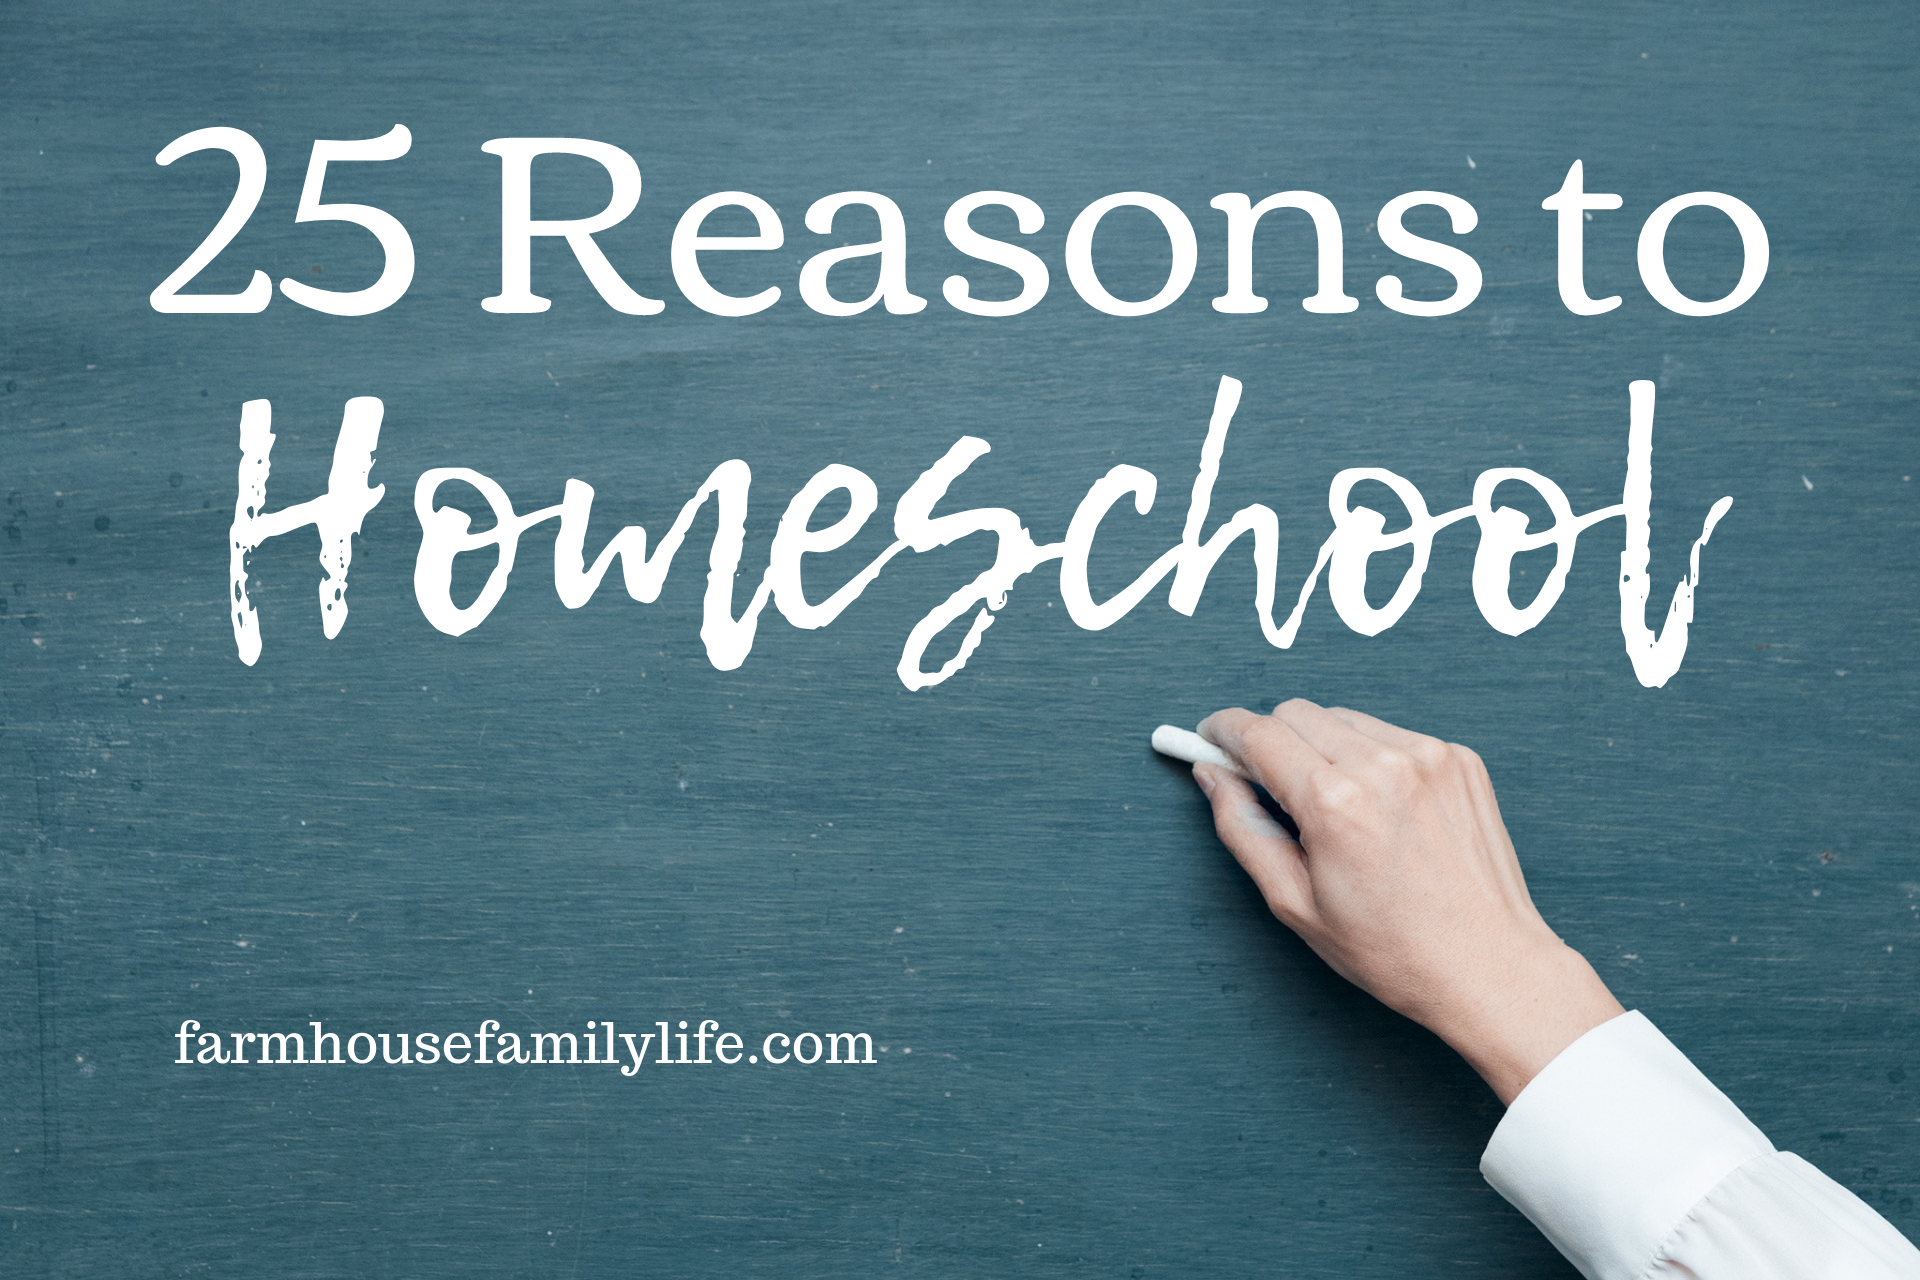 25 Reasons to Homeschool
FarmhouseFamilyLife.com
Why home education is a good idea